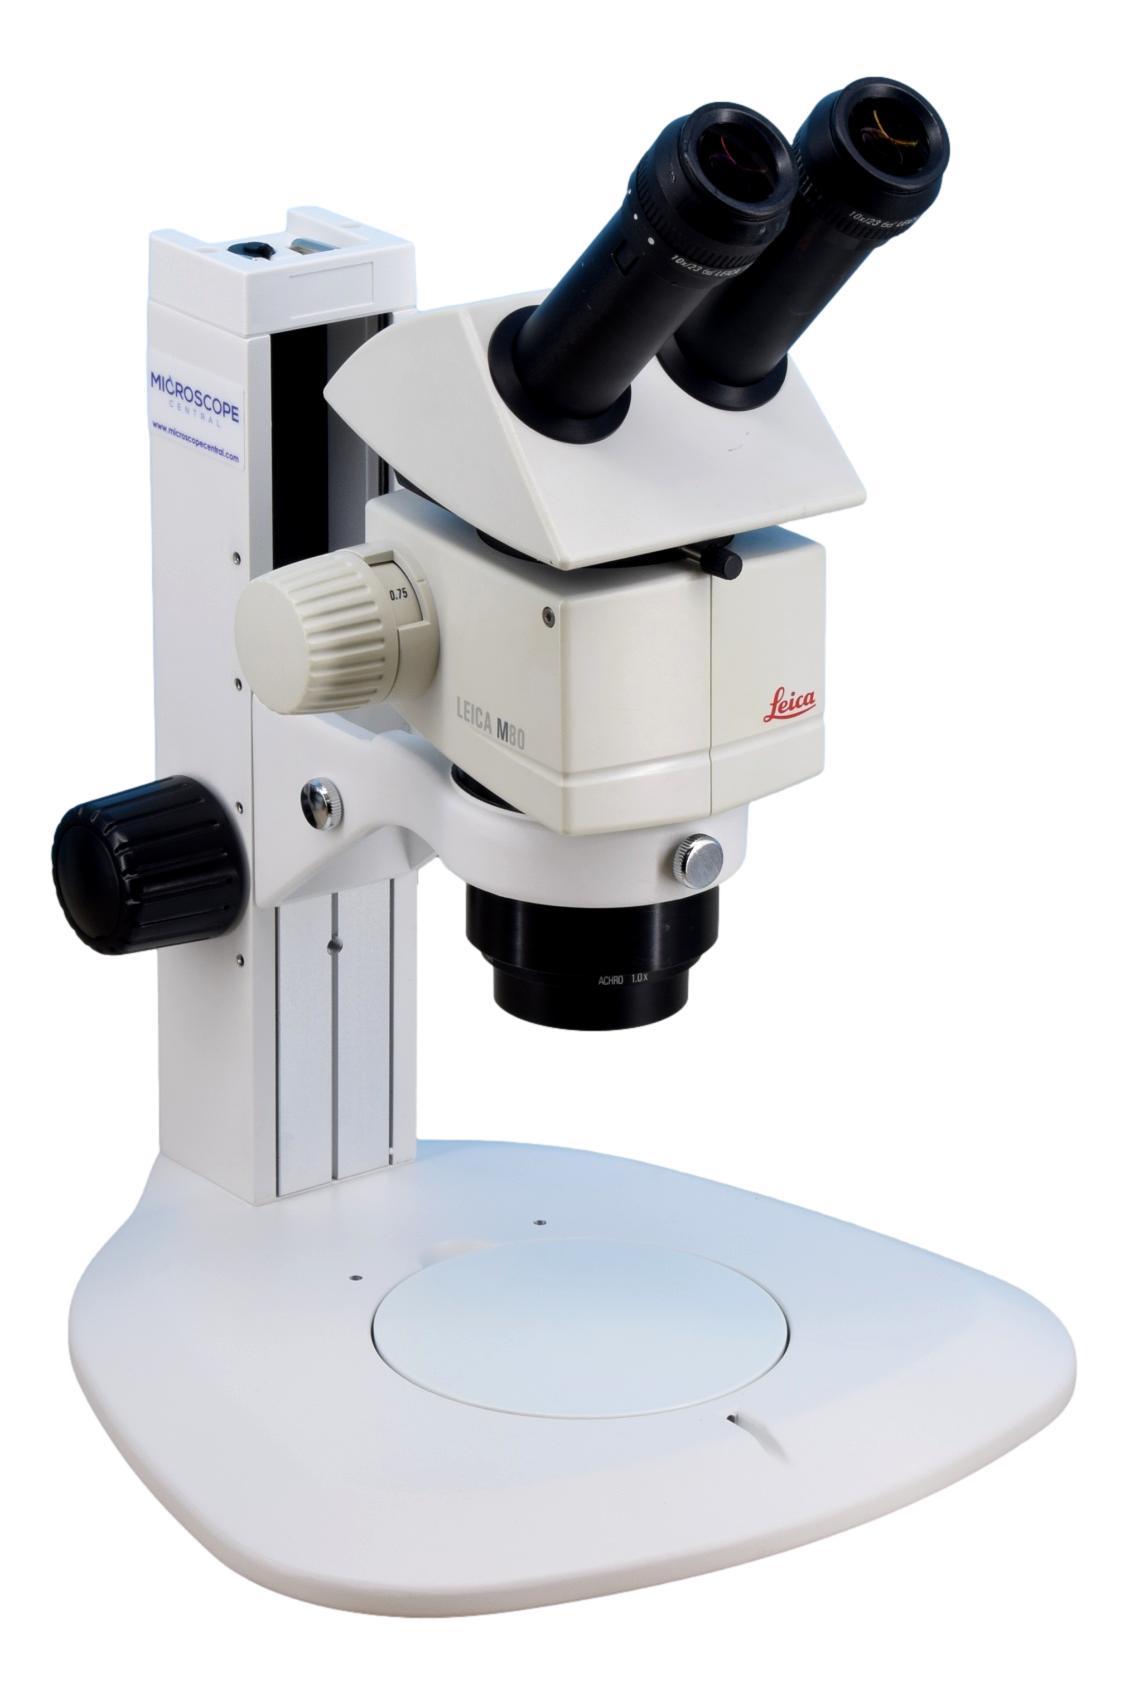 M80 Stereo Zoom Microscope | Refurbished Leica Microscope – Microscope Central